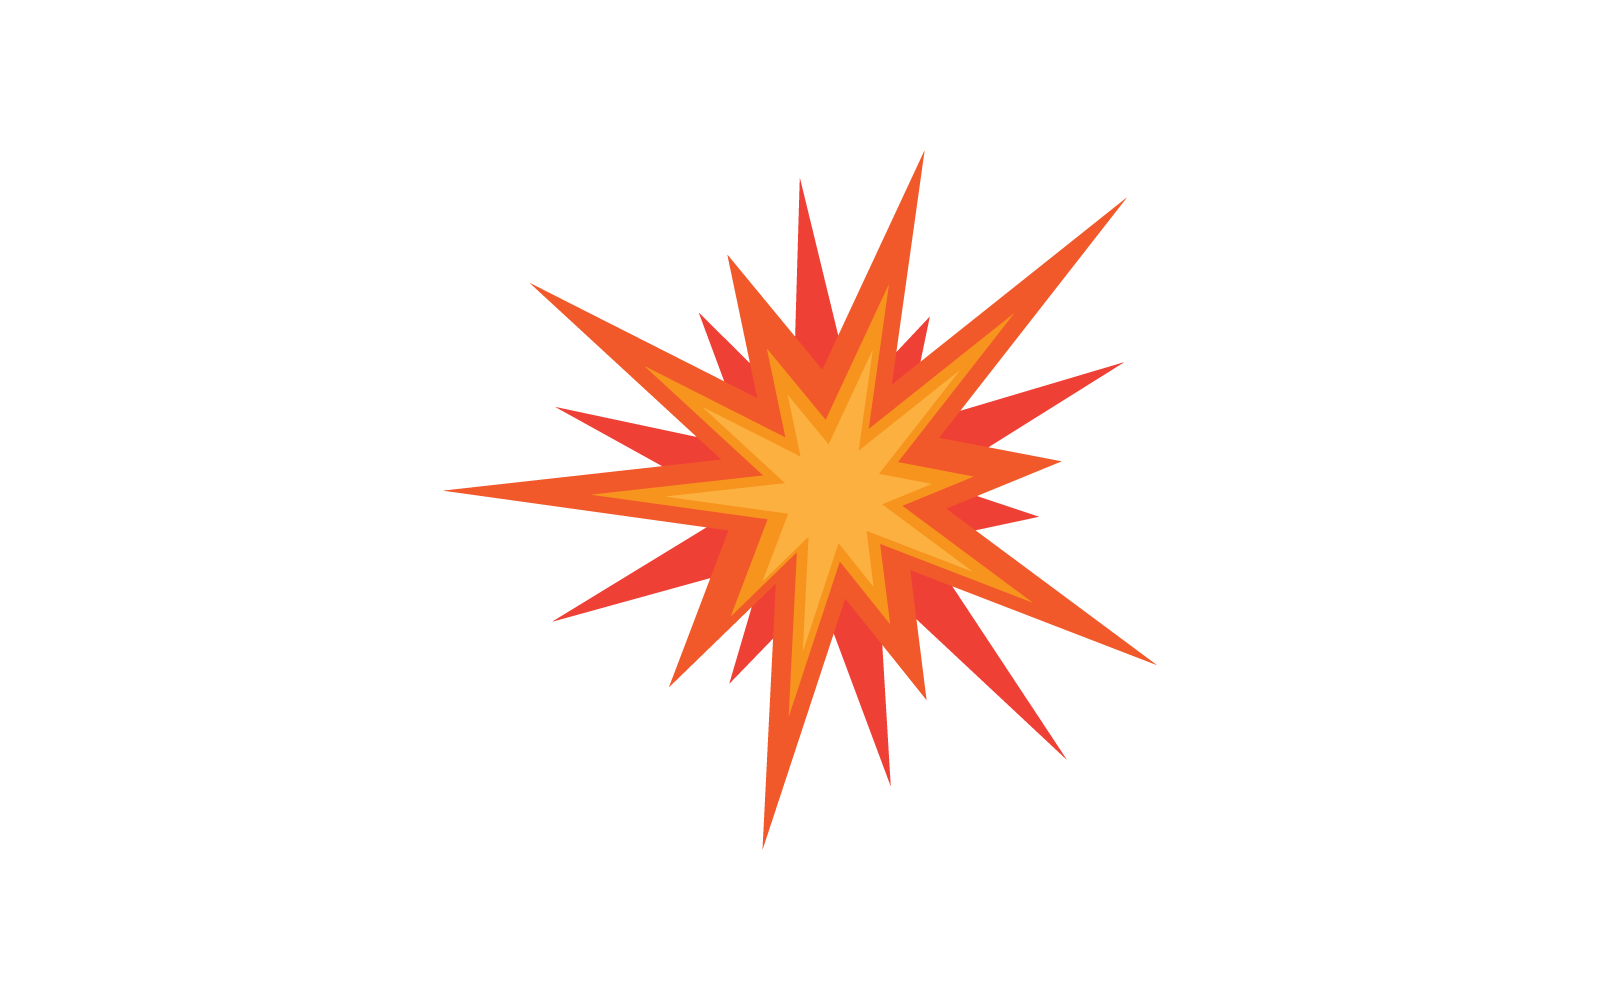 Explosion illustration vector flat design